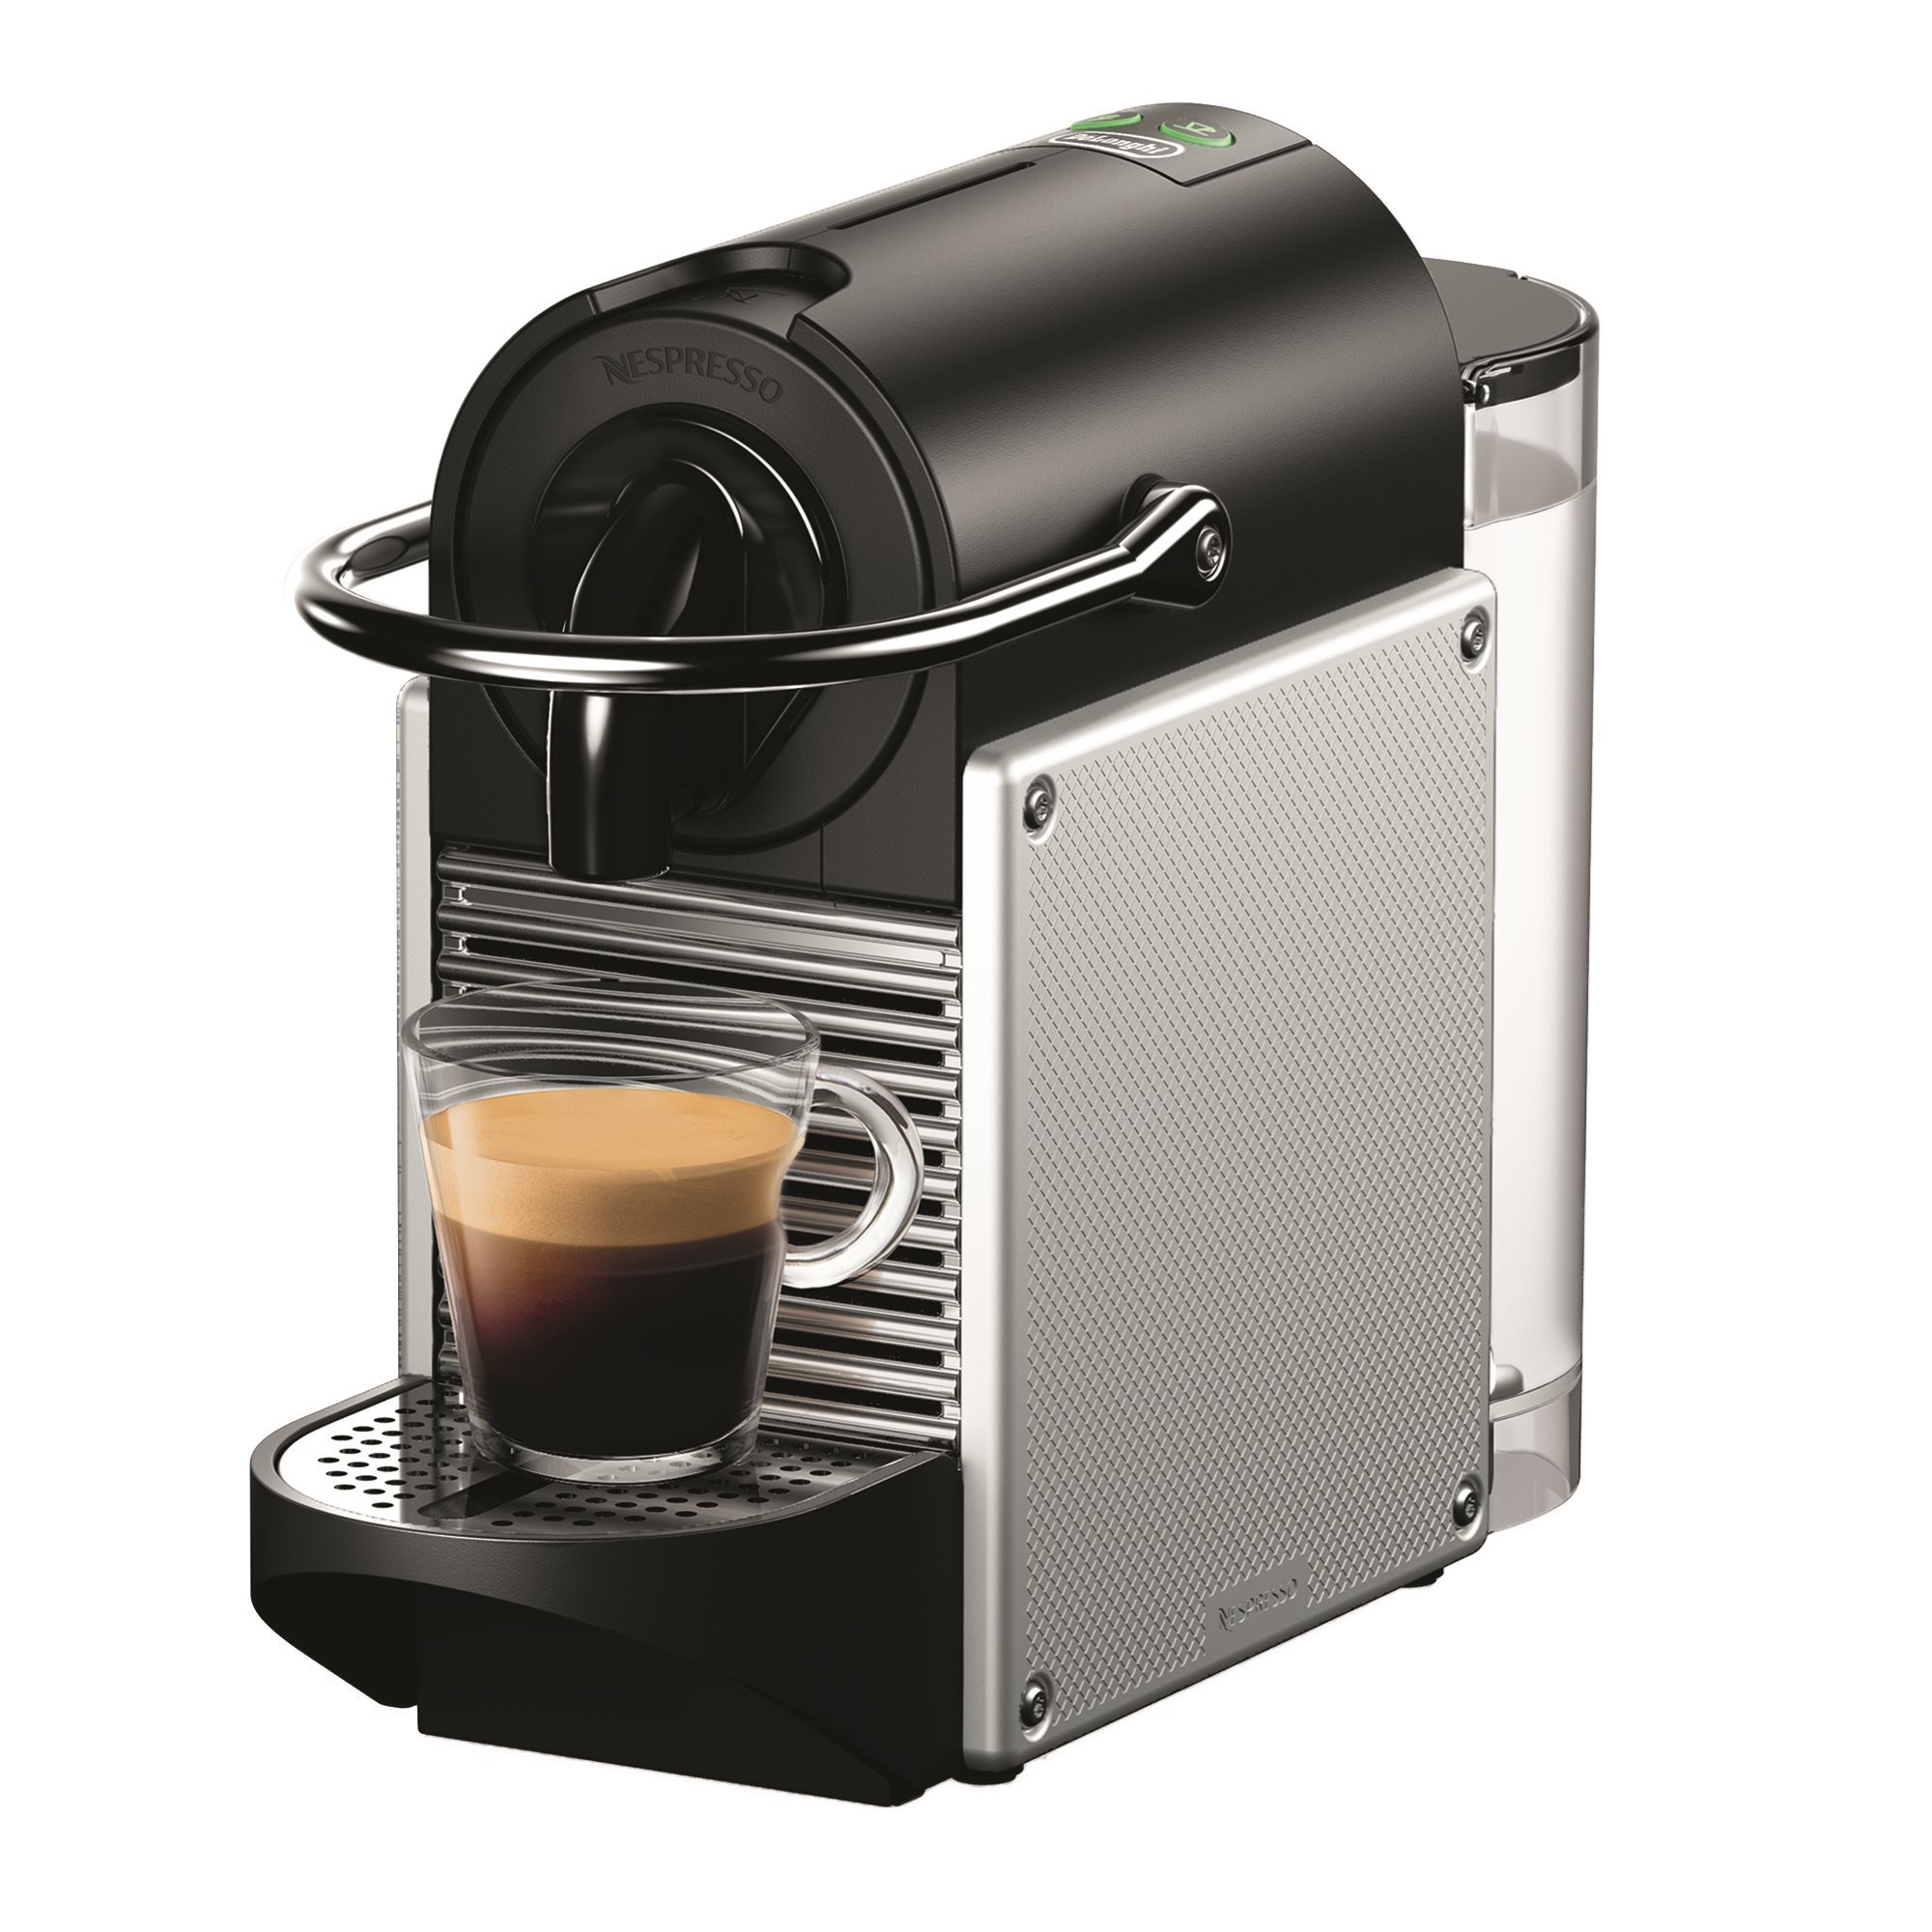 1260W espresso machine, "Pixie", Silver color Nespresso | KitchenShop